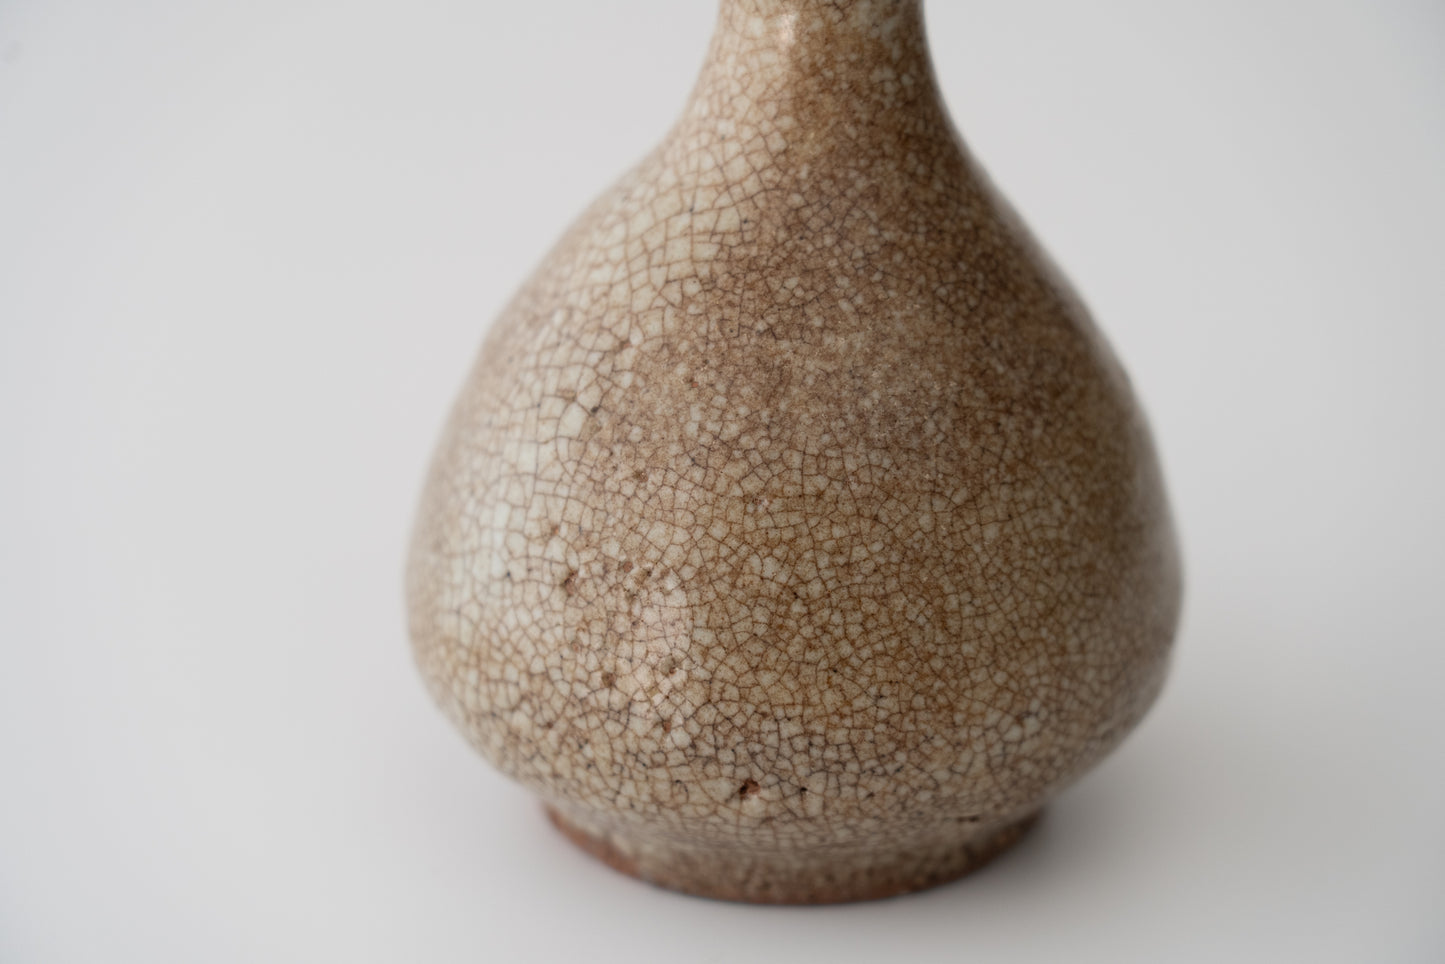 Sake bottle with “Ido” style glaze (provenance: Tatsuaki Kuroda)